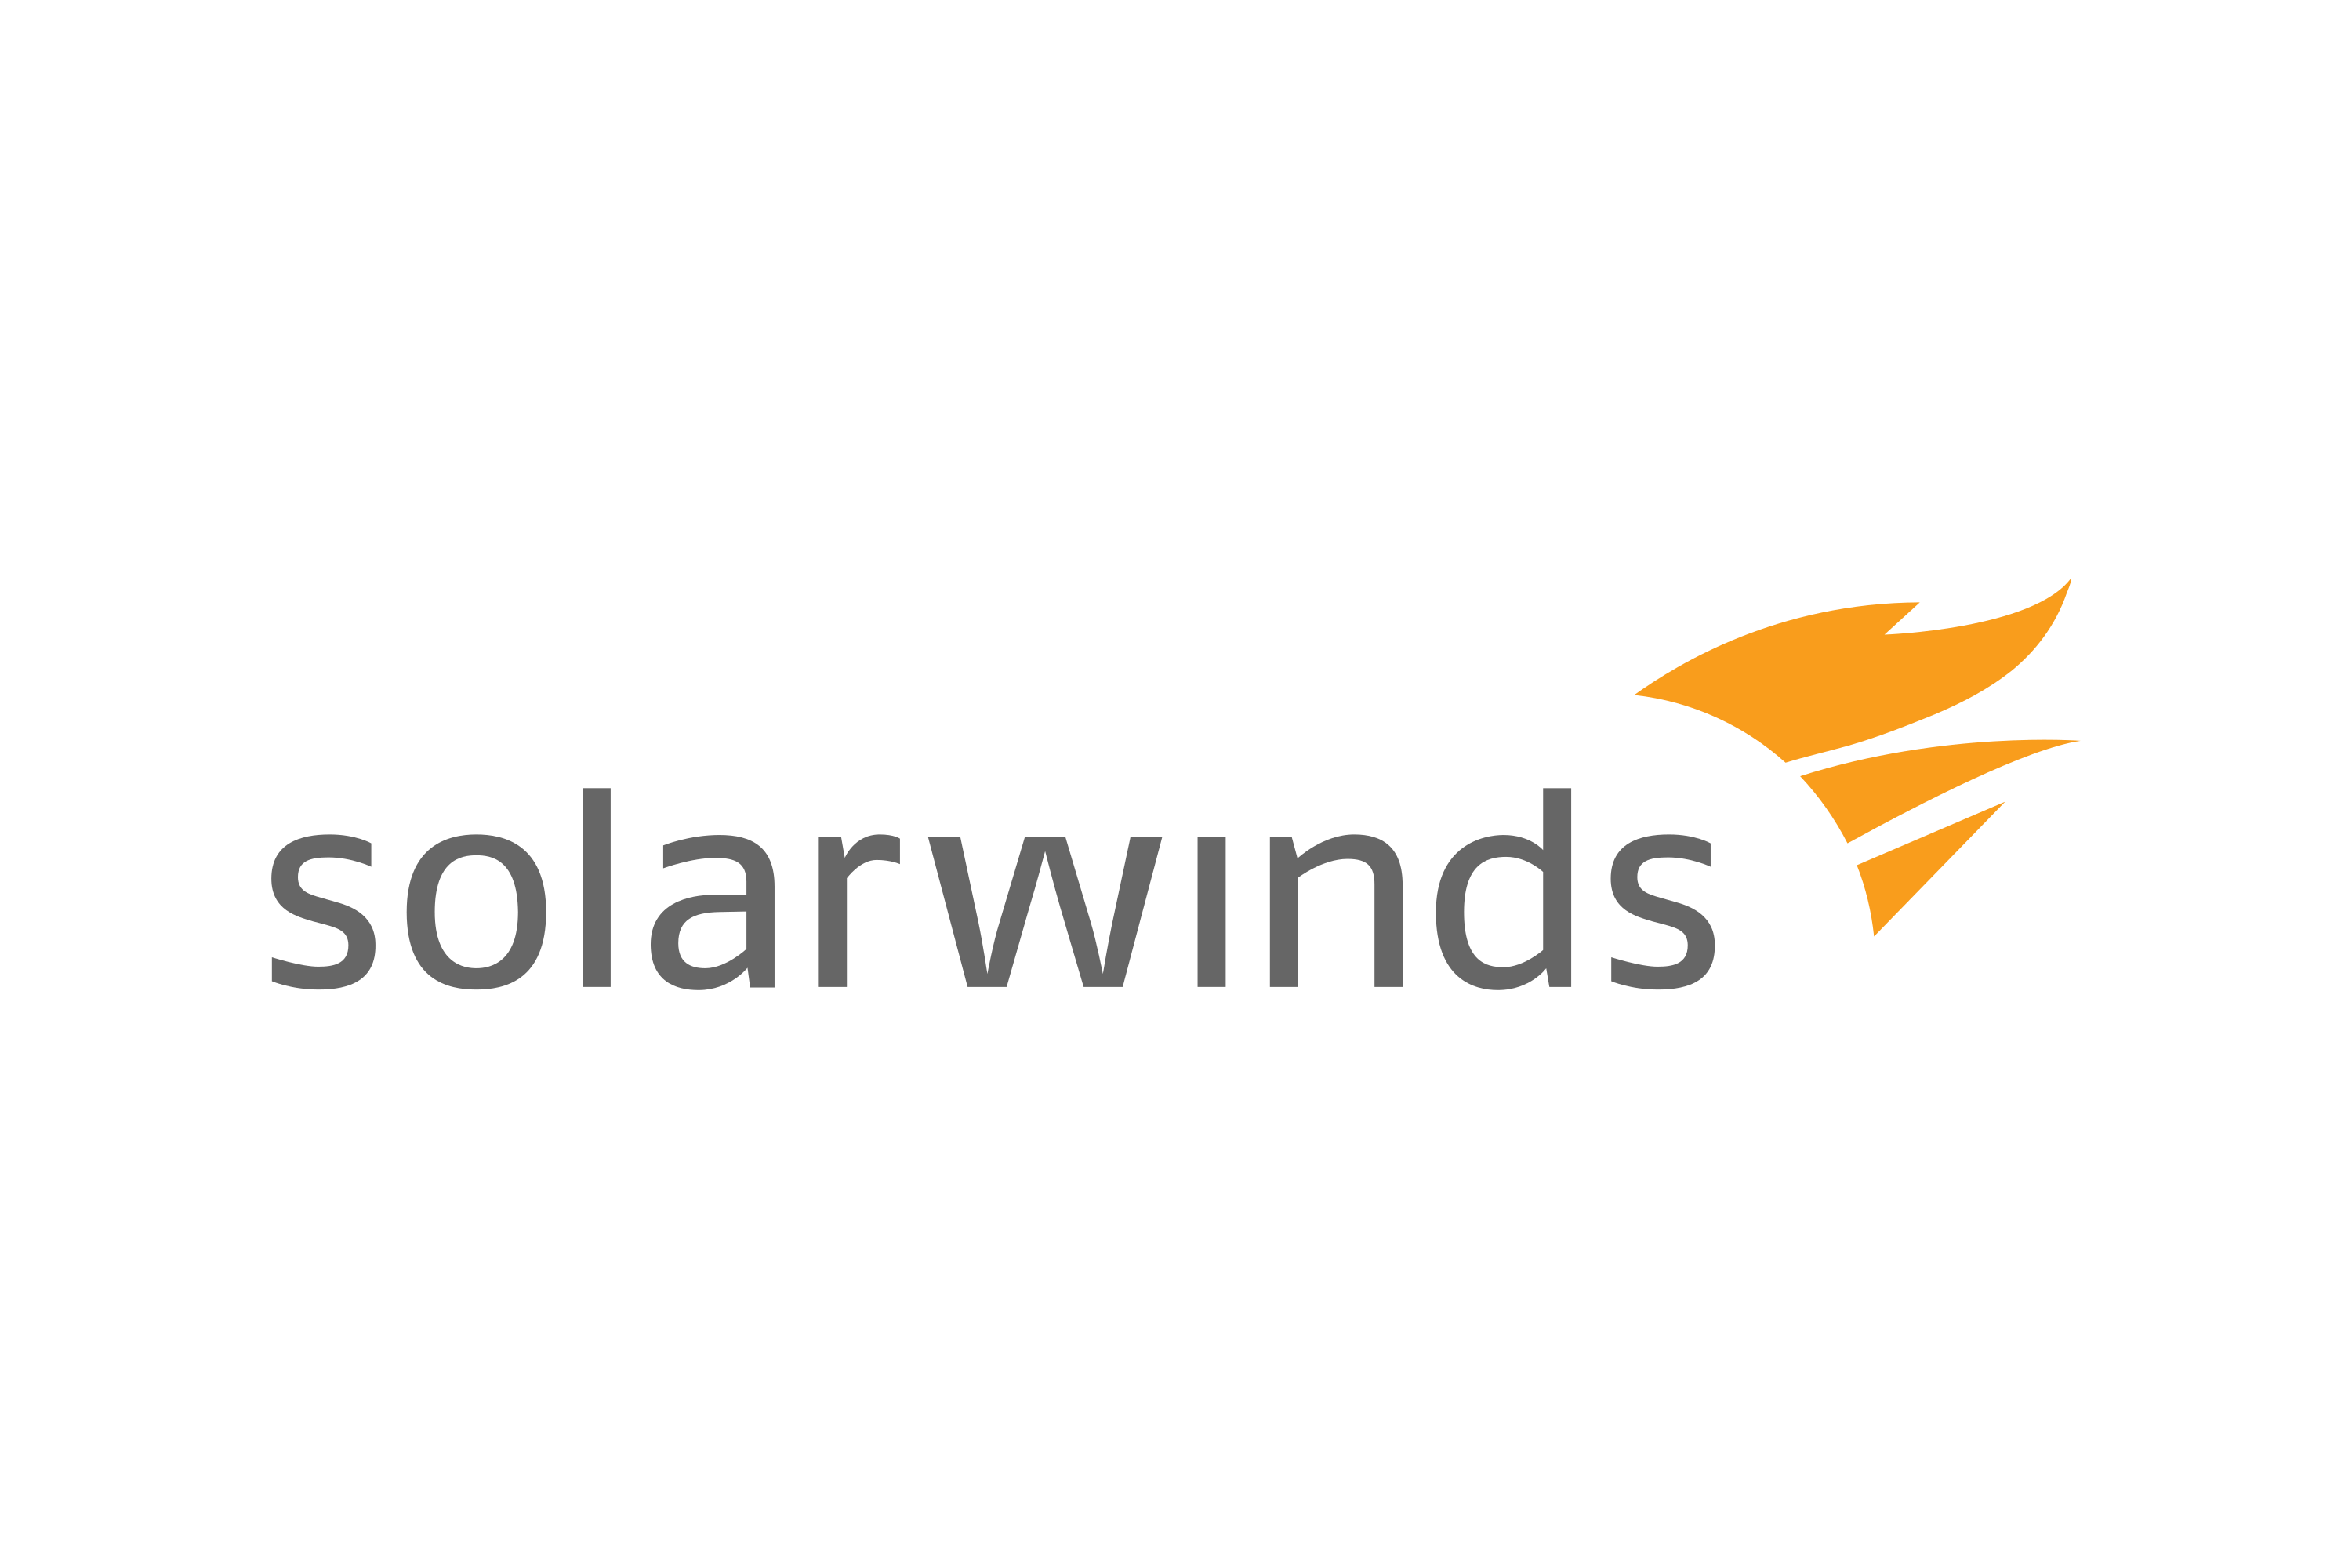 Download SolarWinds Logo in SVG Vector or PNG File Format - Logo.wine